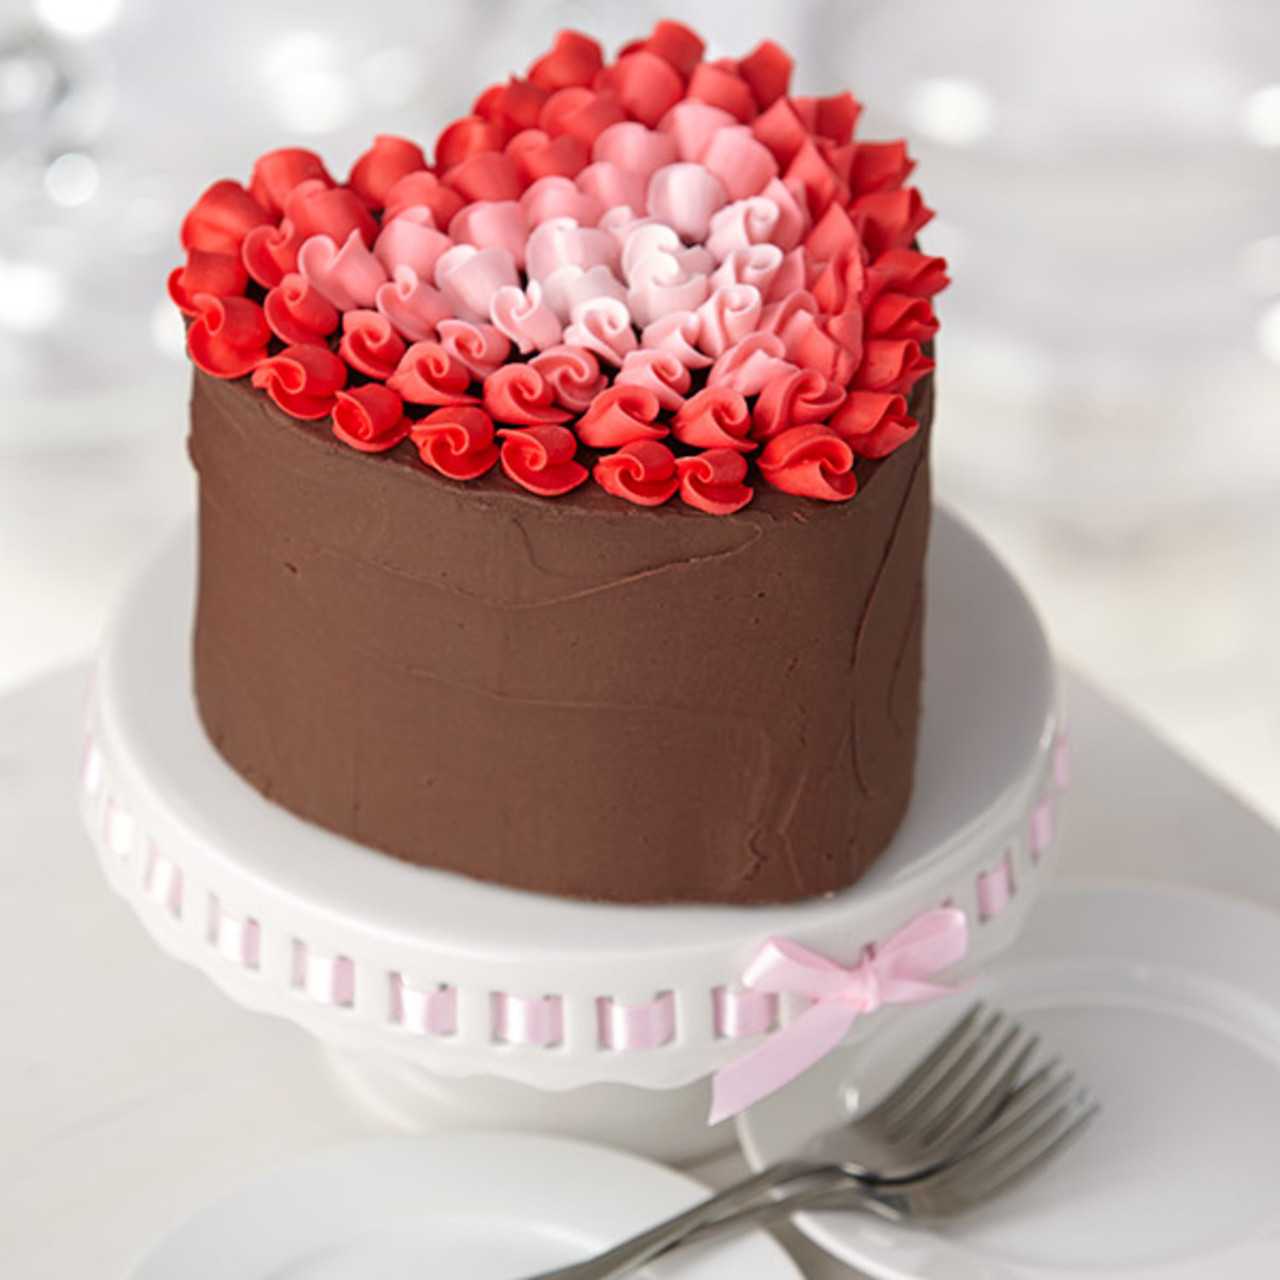 XOXO Heart Cake - Send or Share sweet love